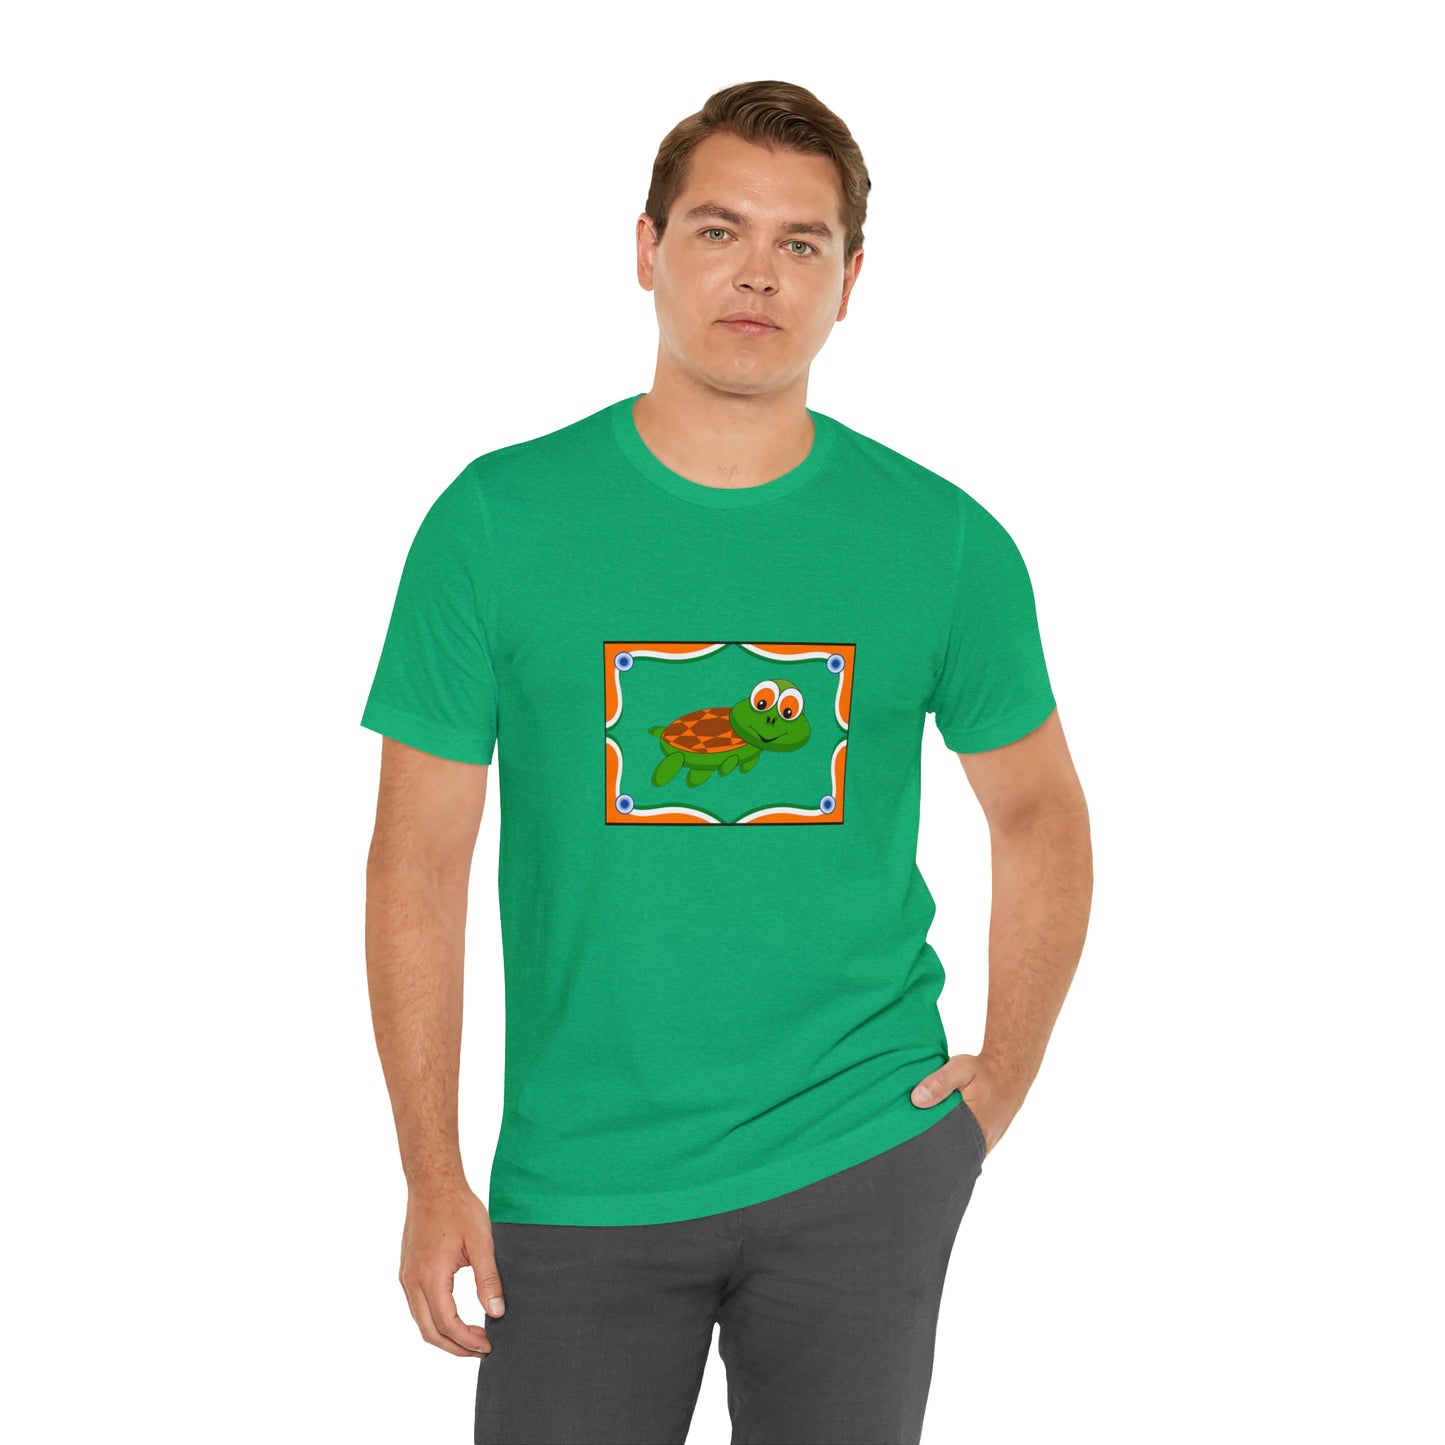 Turtle Swimming, Animals, Sports, Swimming- Adult, Regular Fit, Soft Cotton, T-shirt